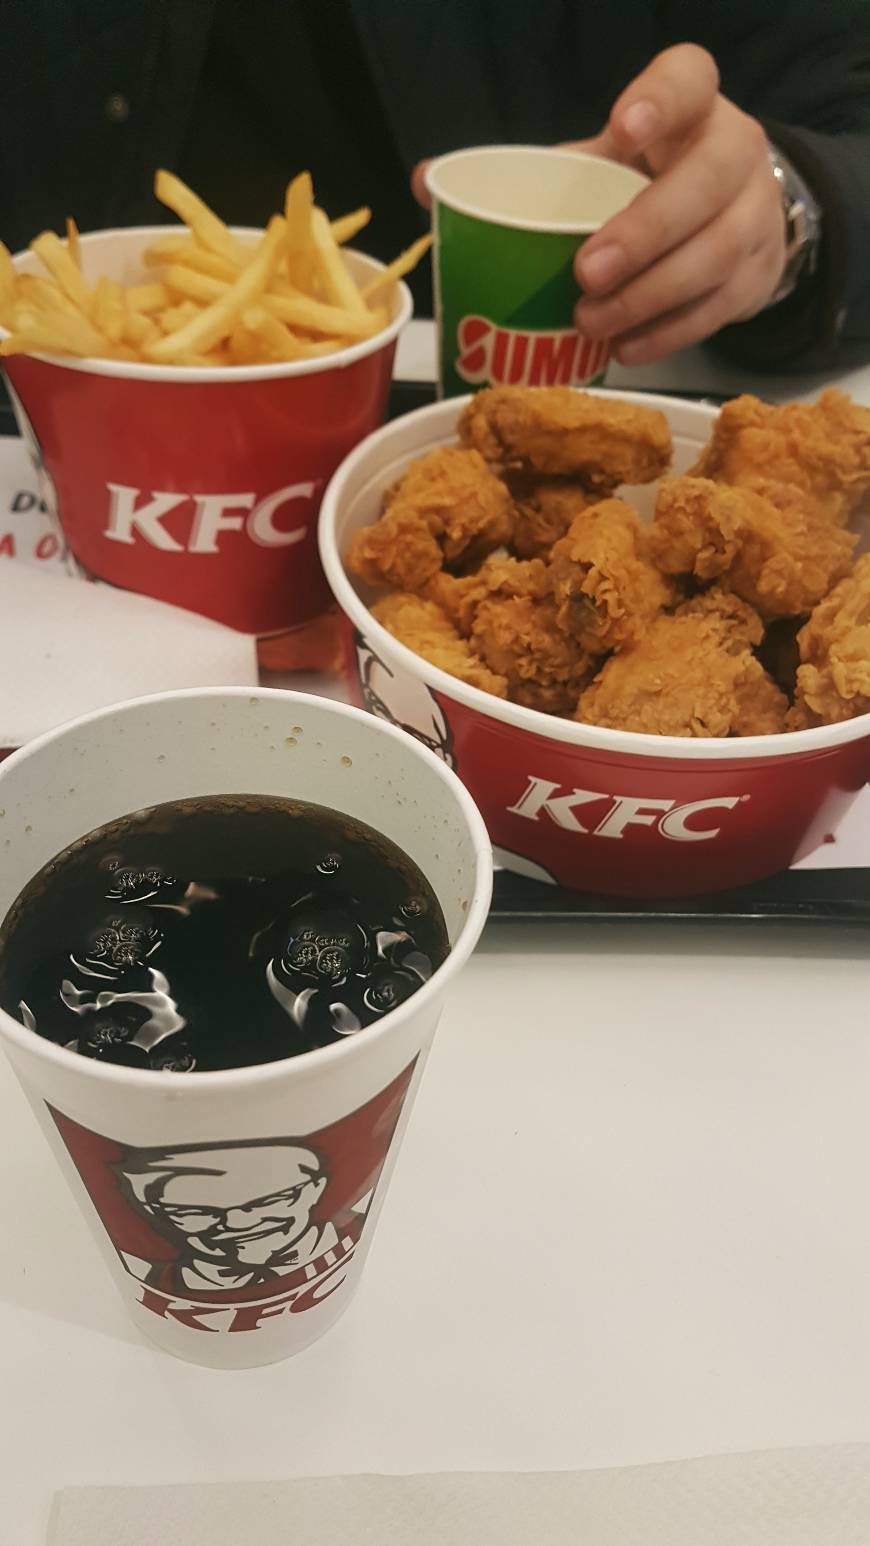 KFC Fórum Coimbra